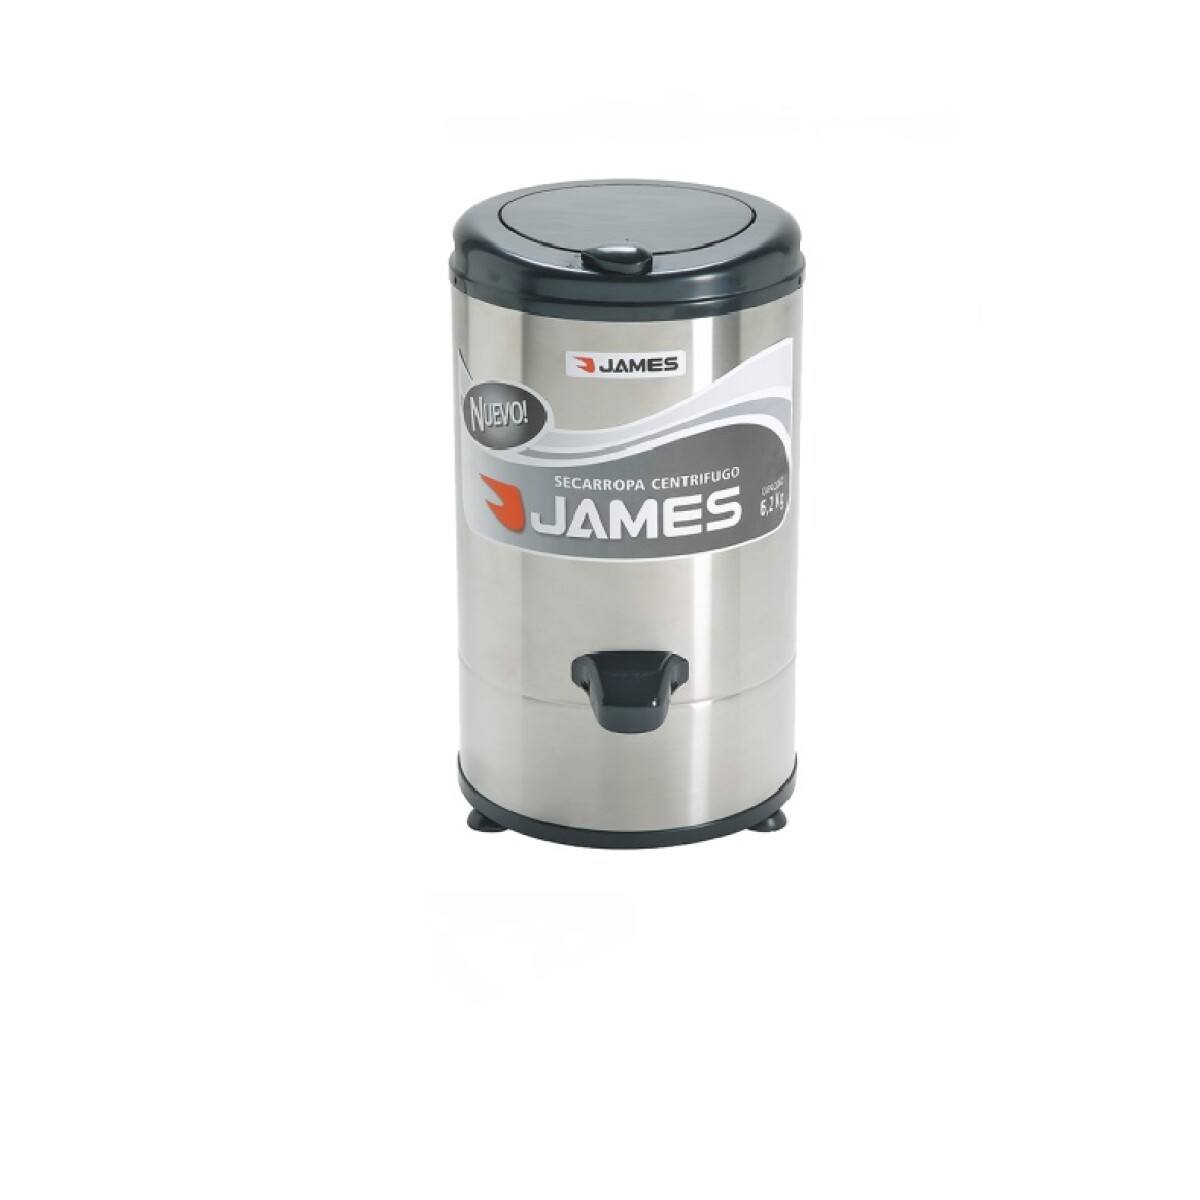 Centrigugadora James 6,2 Acero Inox - 001 